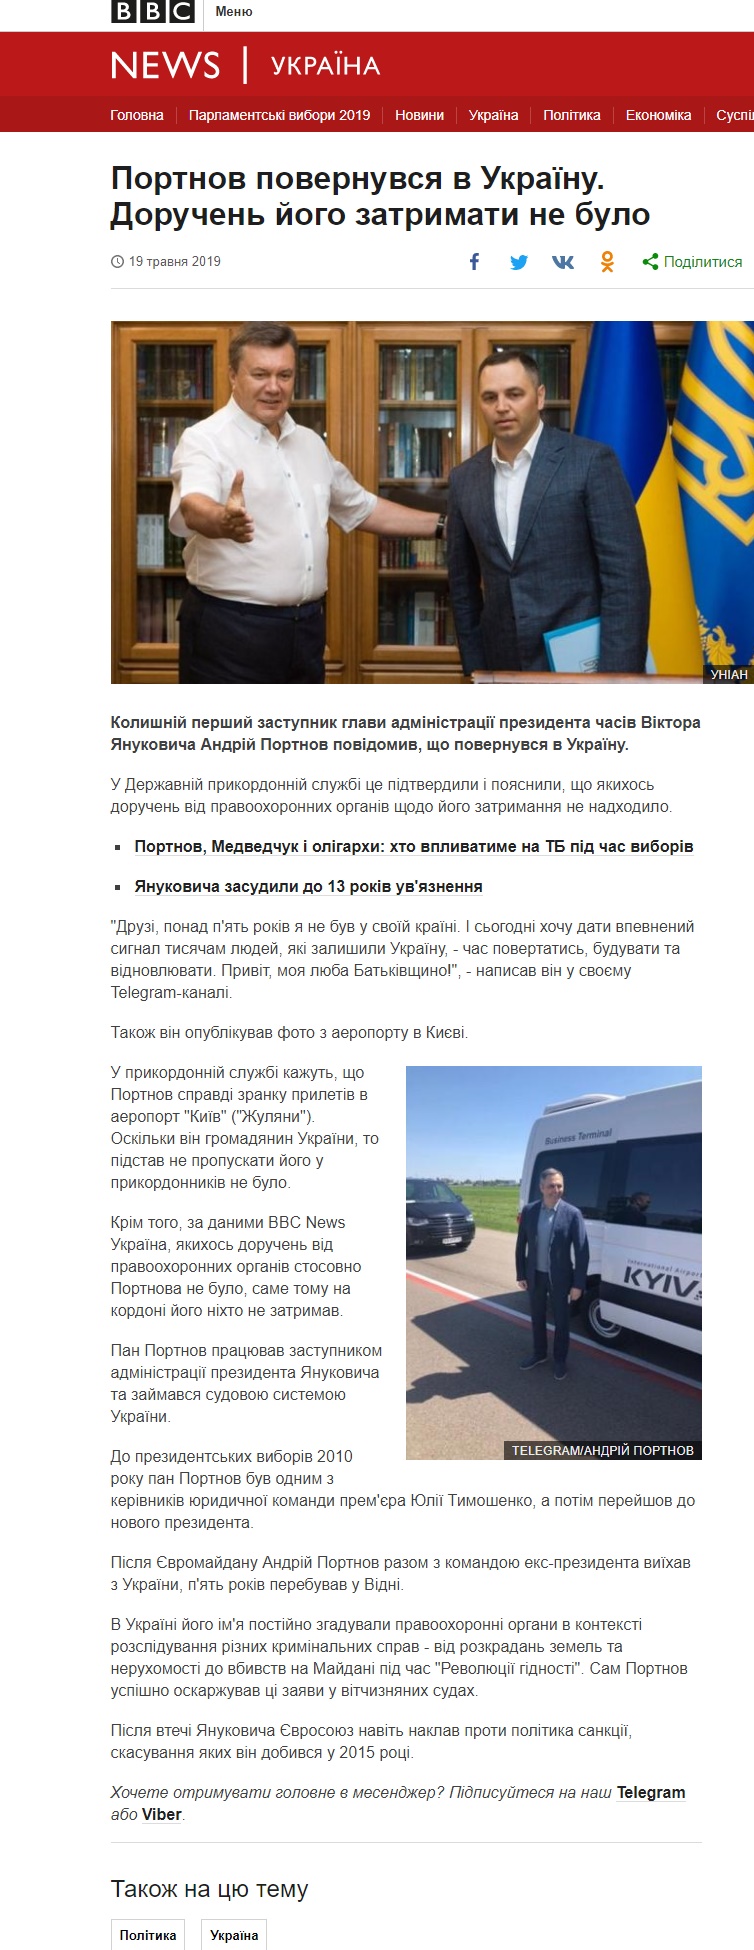 https://www.bbc.com/ukrainian/news-48326968